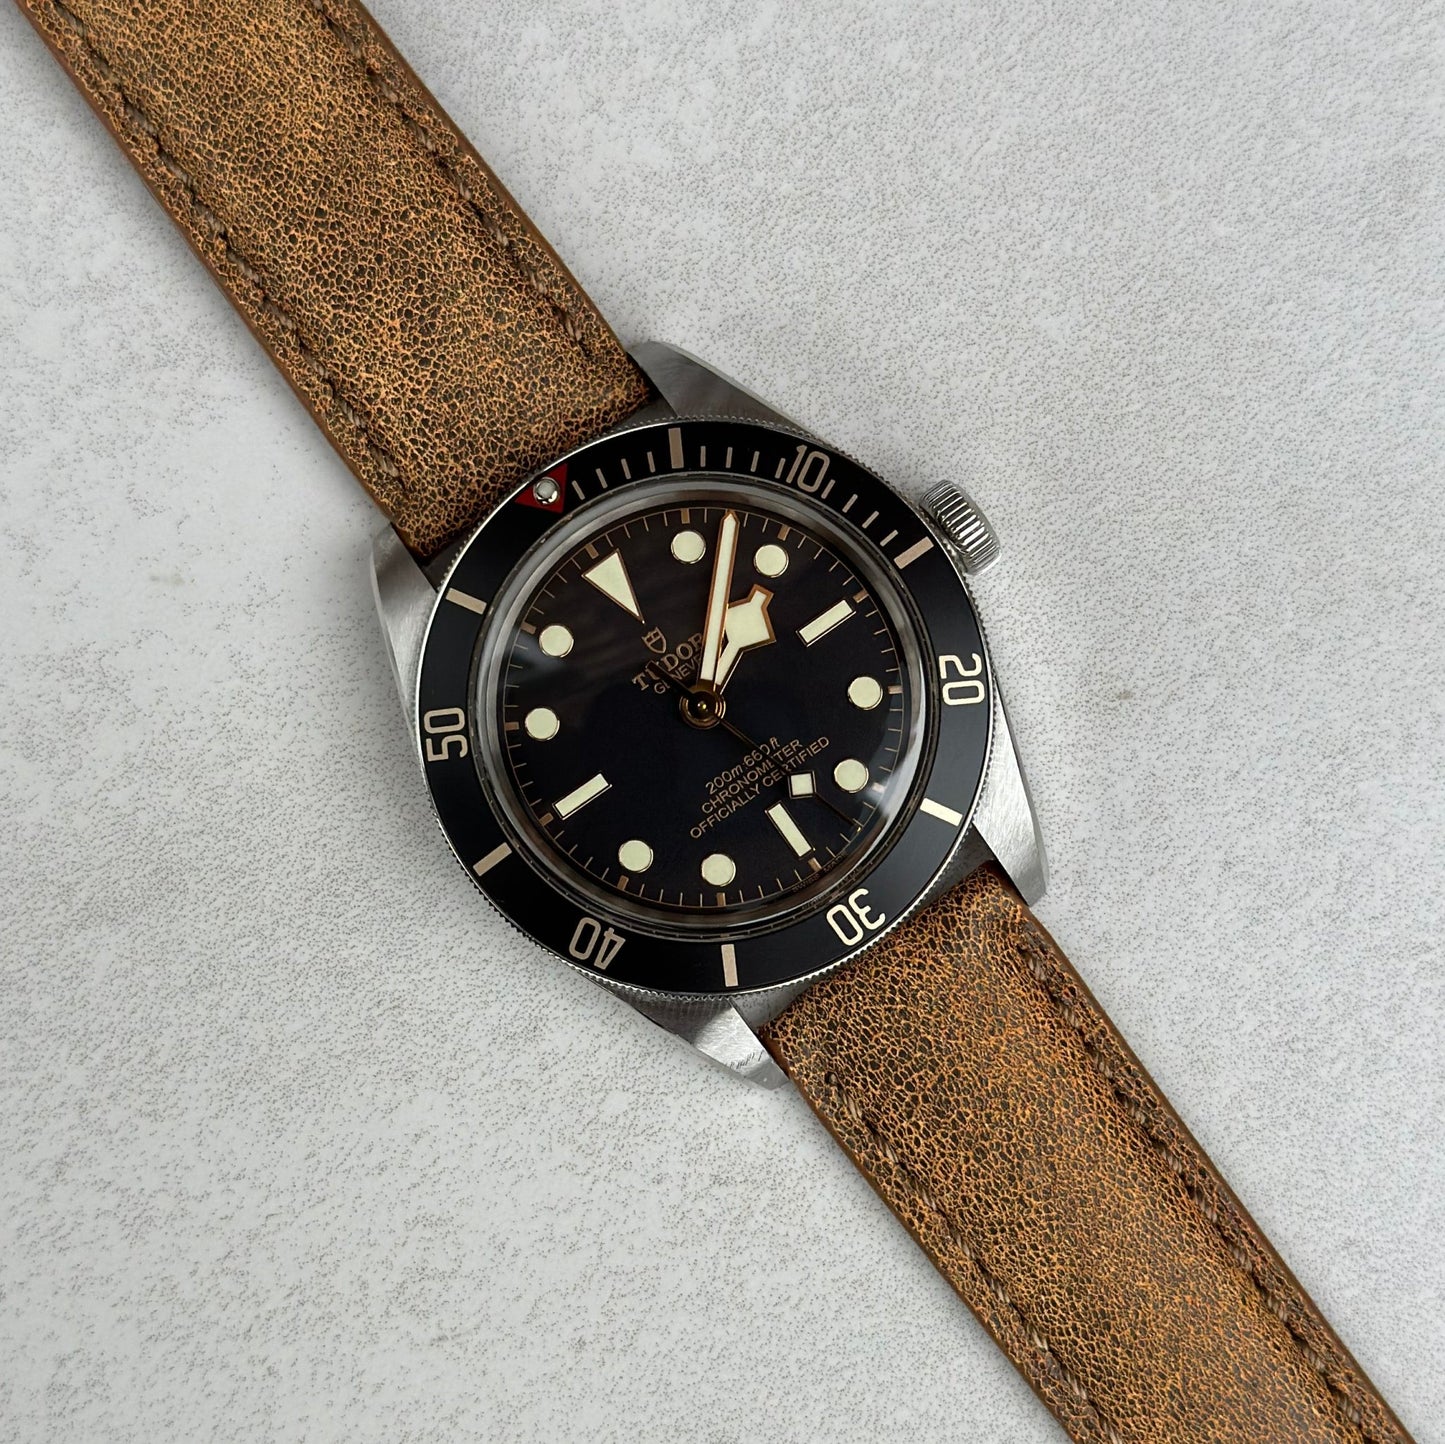 Desert sand full grain leather watch strap on the Tudor Blackbay 58. Watch And Strap.